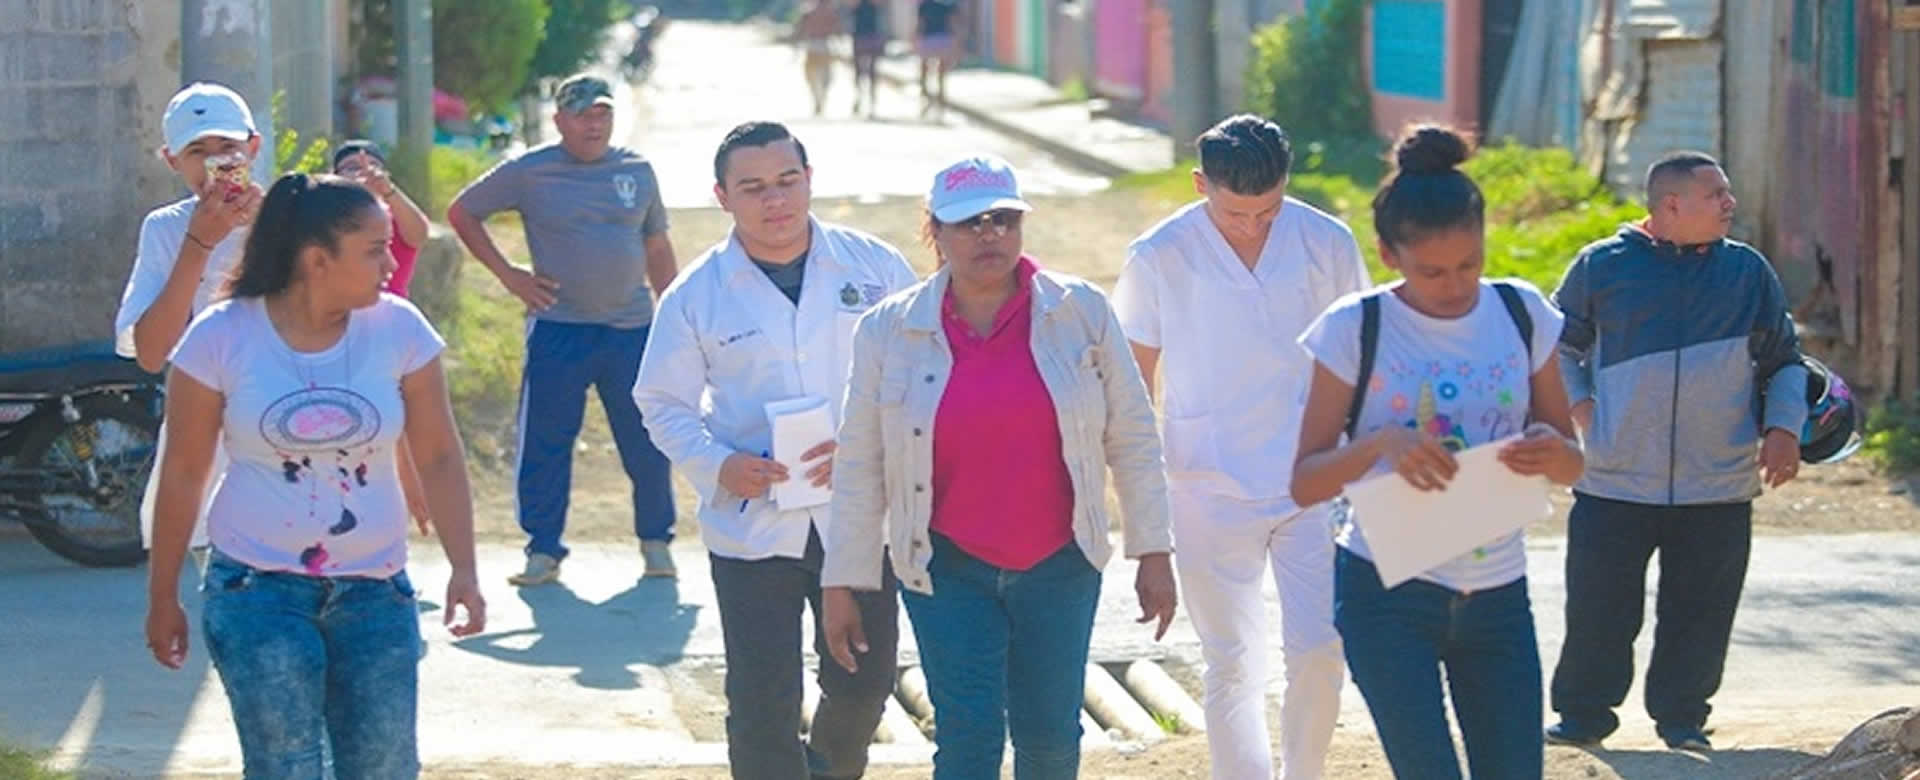 Charlas preventivas del COVID-19 llegan al barrio La Primavera, Managua